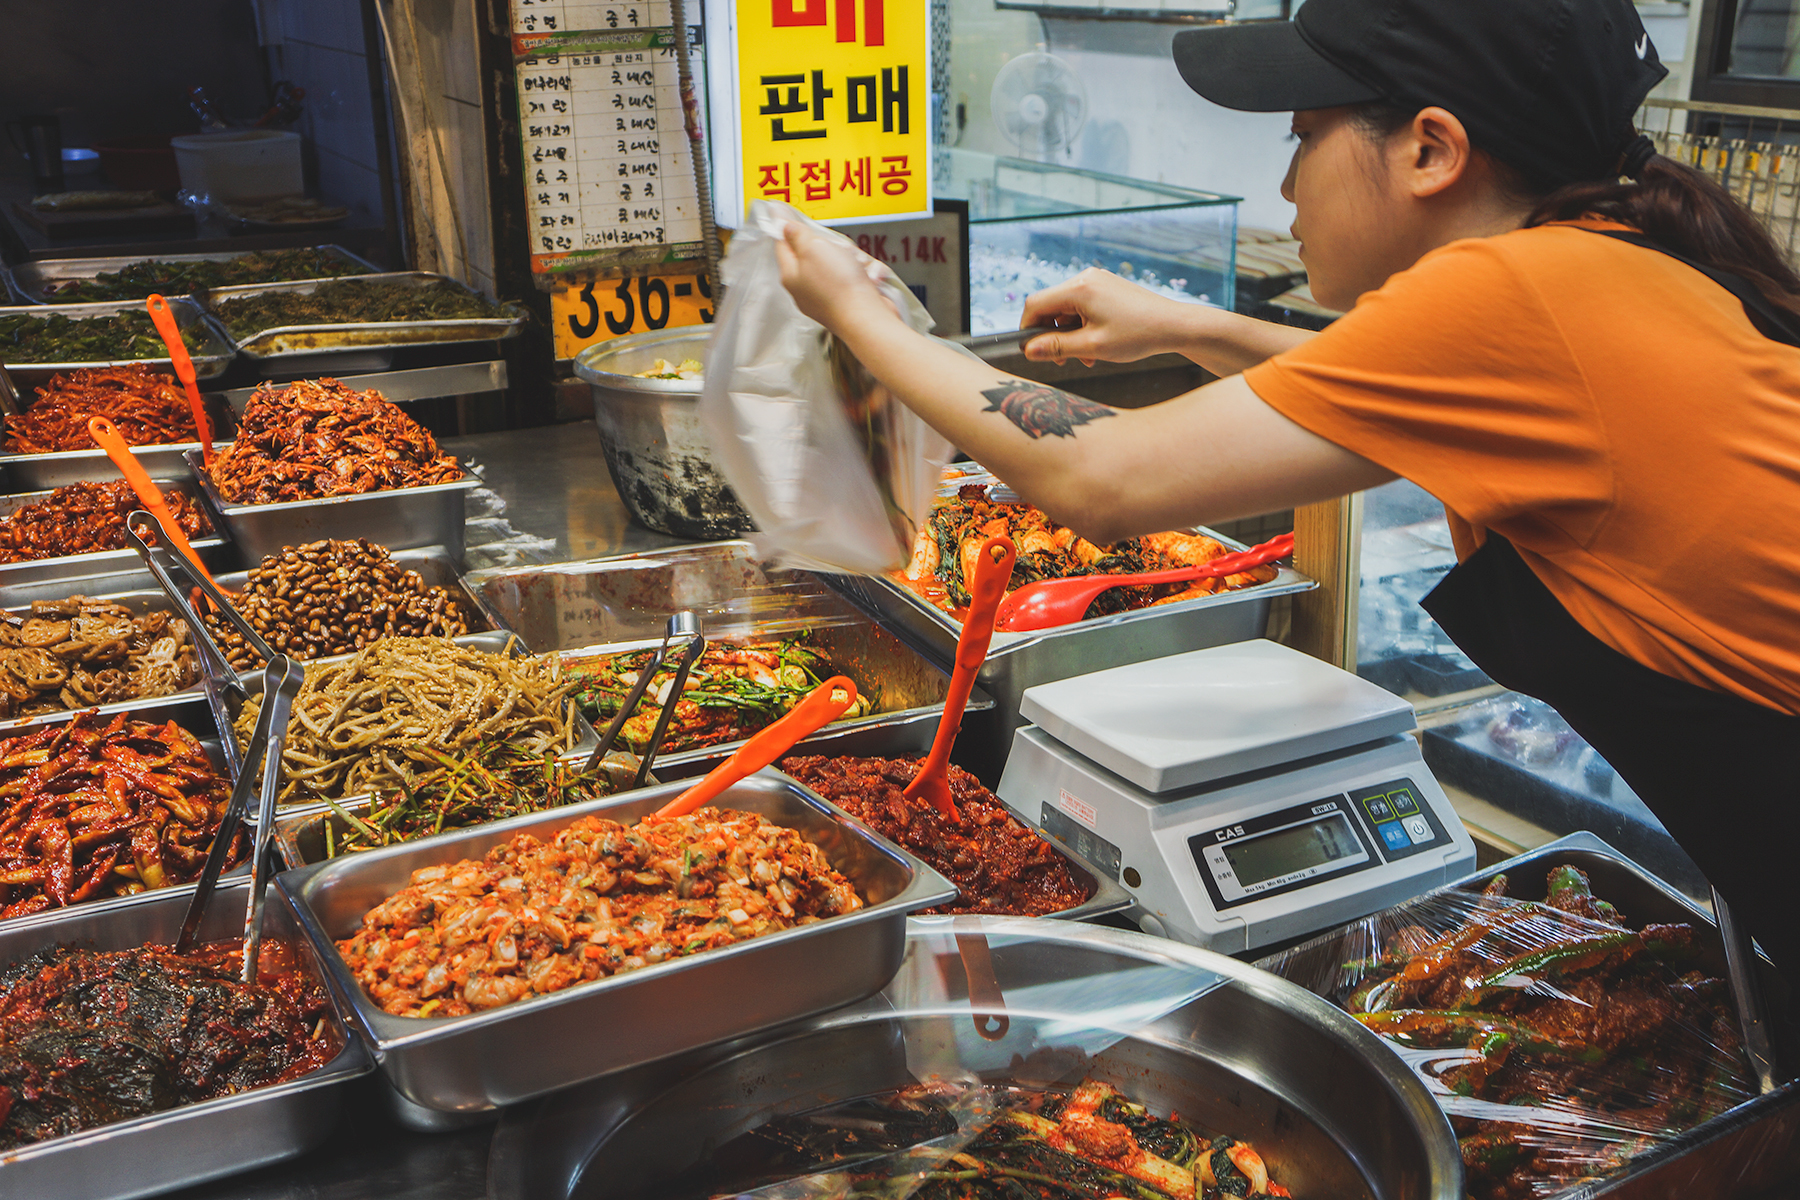 Travel Photo Album - Korean Food Markets